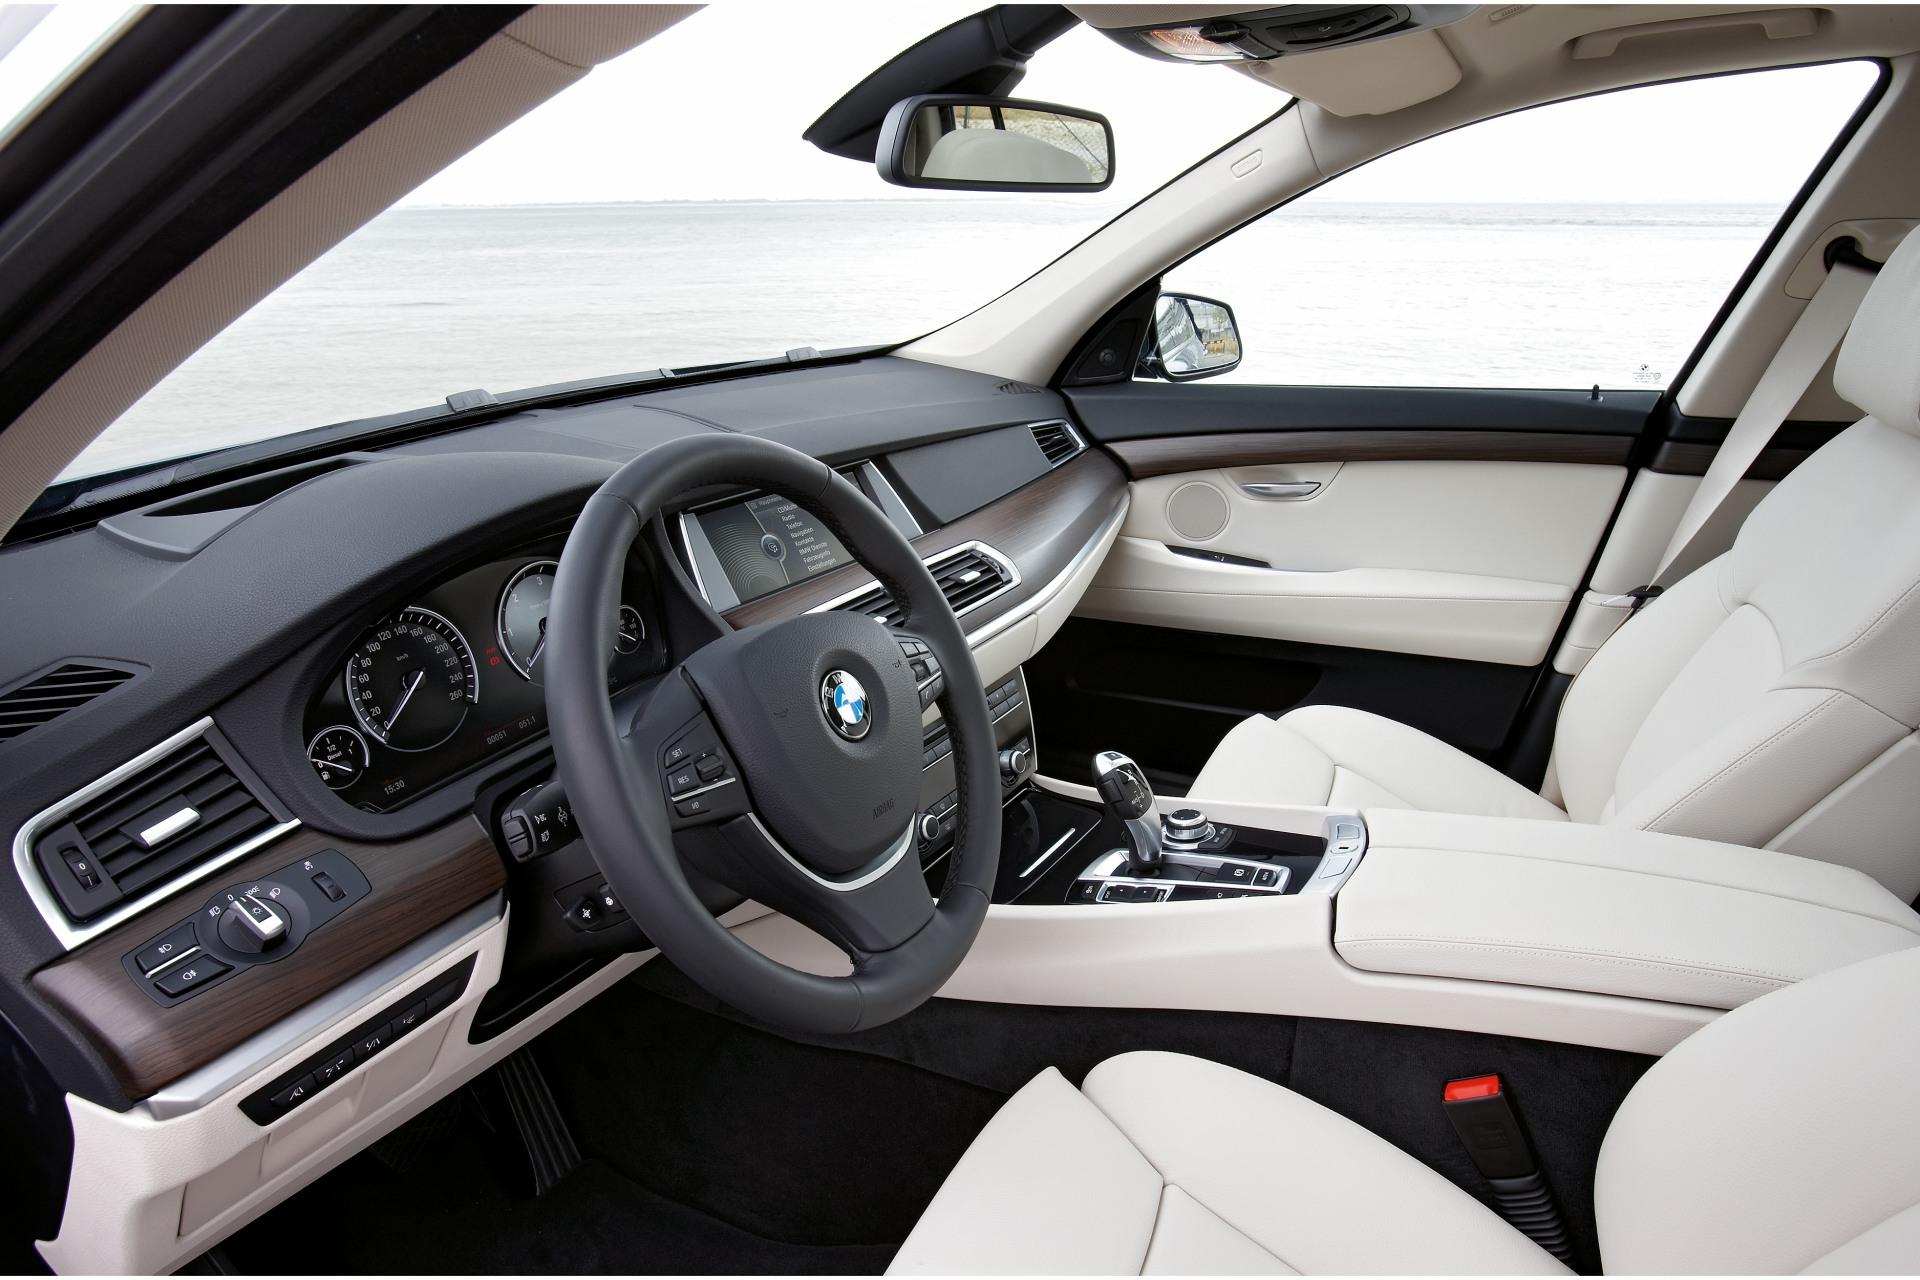 2010 BMW 5 Series Gran Turismo